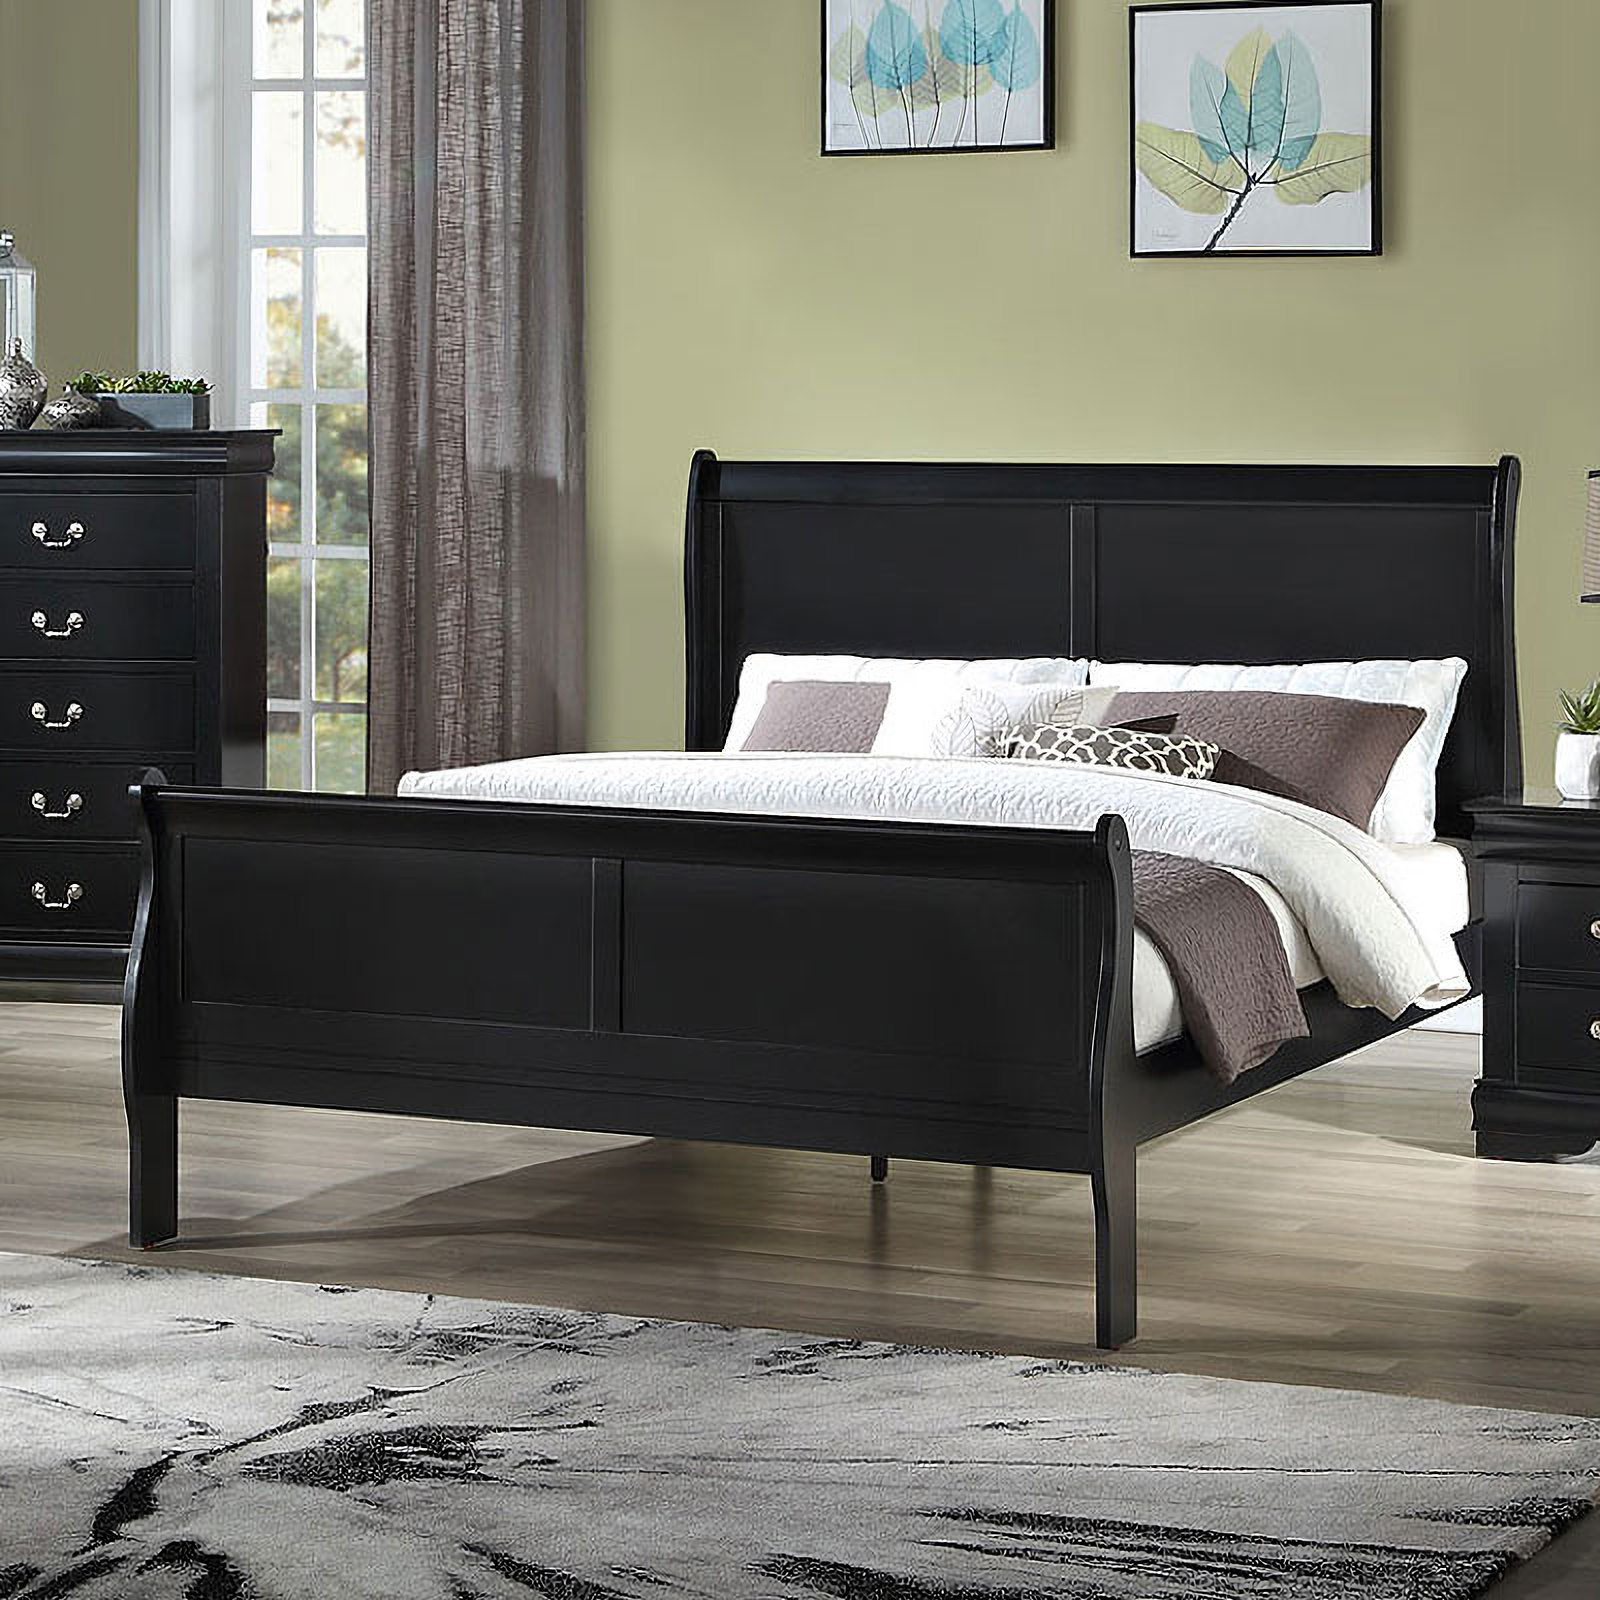 Louis Philip Youth Sleigh Bedroom Set (Black) by Crown Mark